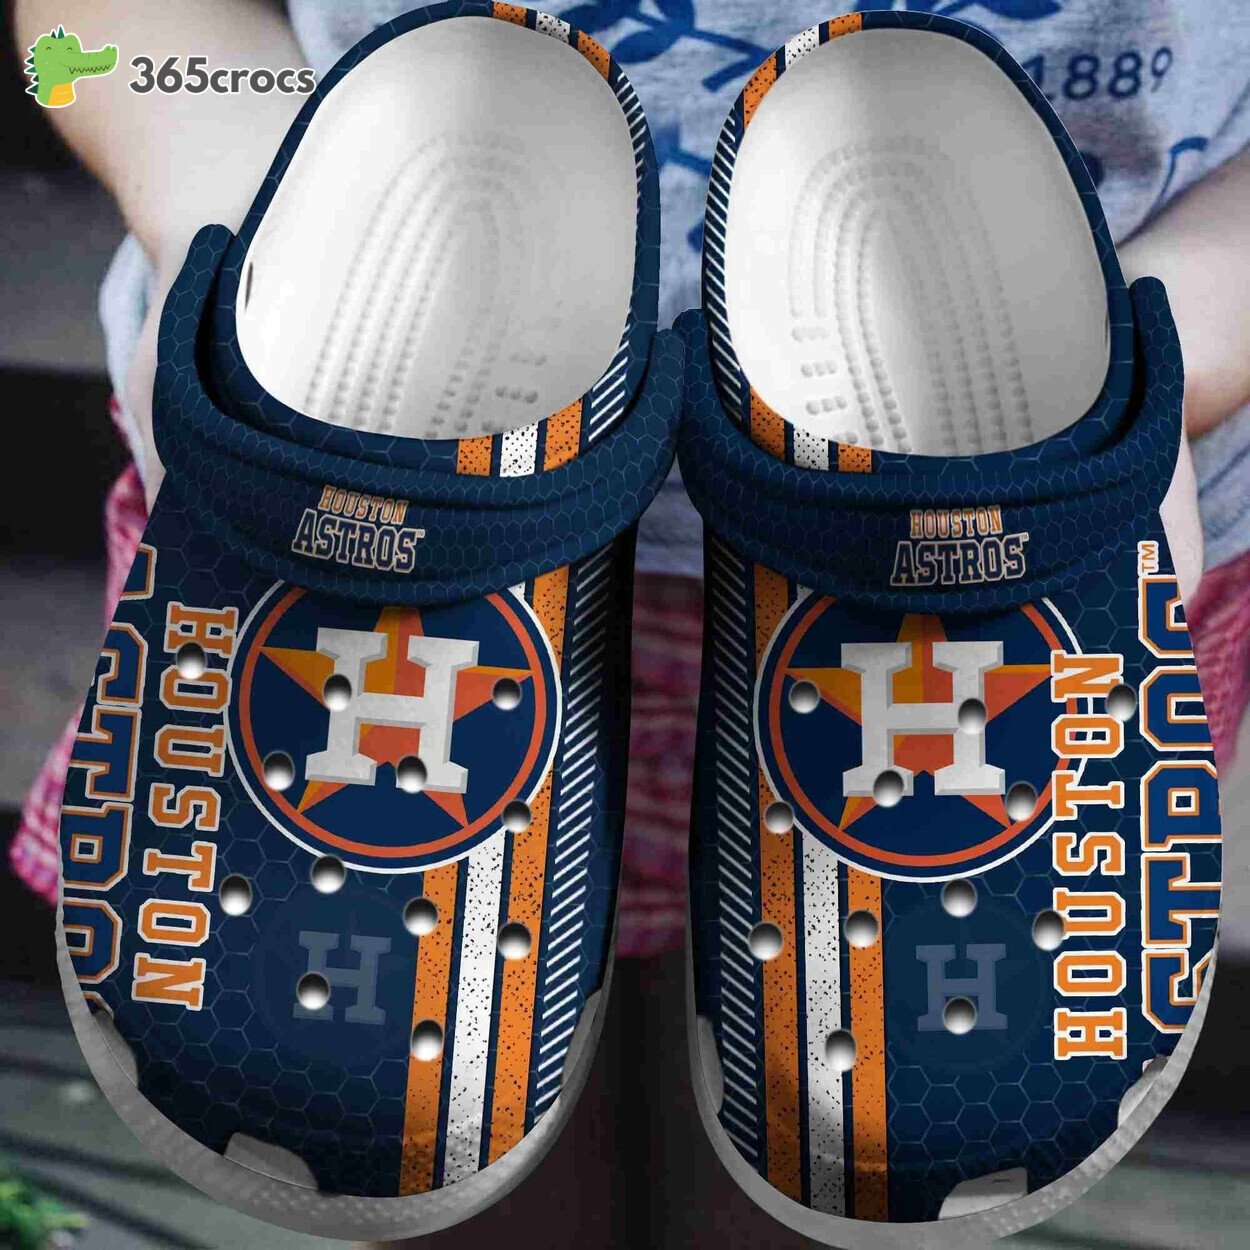 Houston Astros Baseball Unique Design Comfortable Crocss Clog Footwear